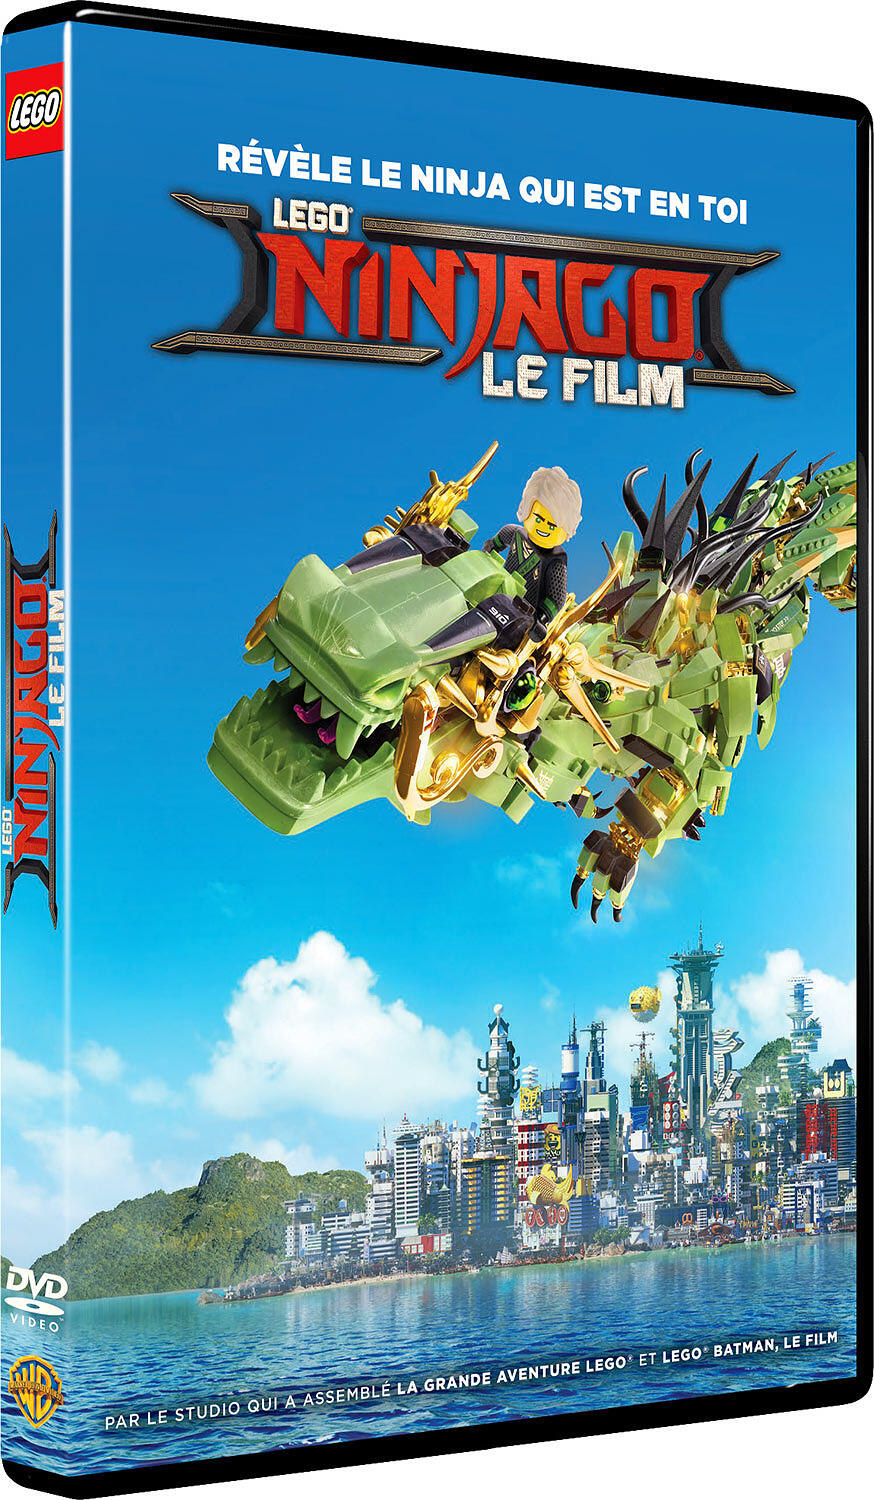 Couverture de : LEGO Ninjago : Le film